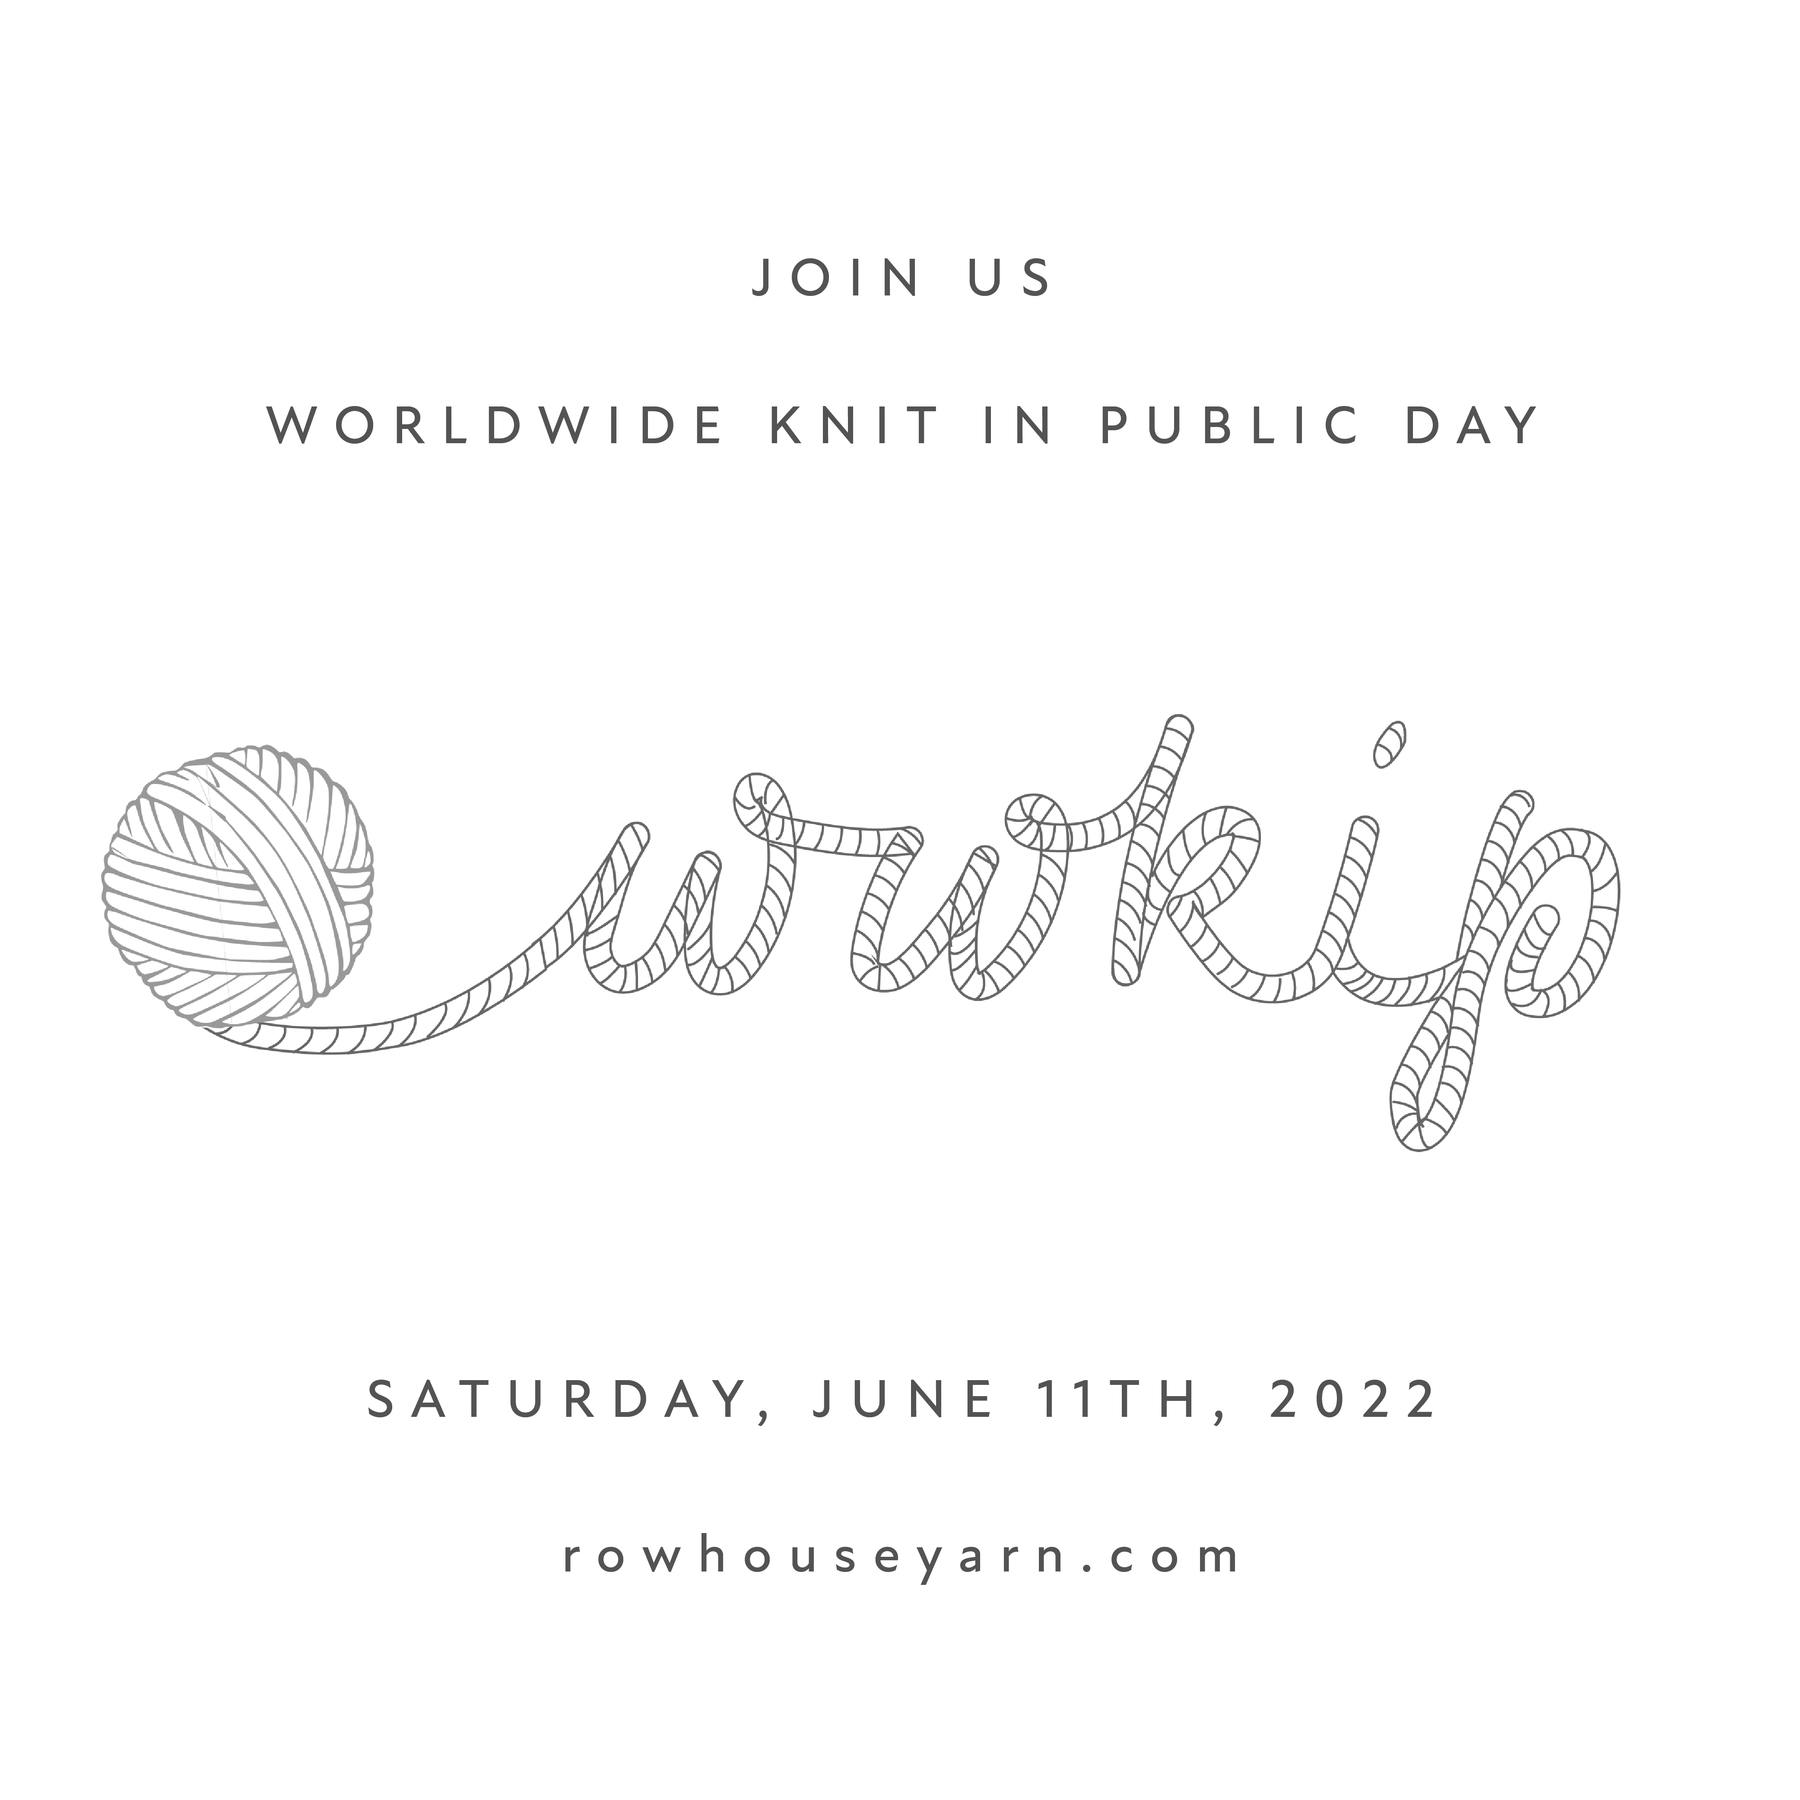 Worldwide Knit in Public Day 2022 - Join us in Seattle on June 11th!